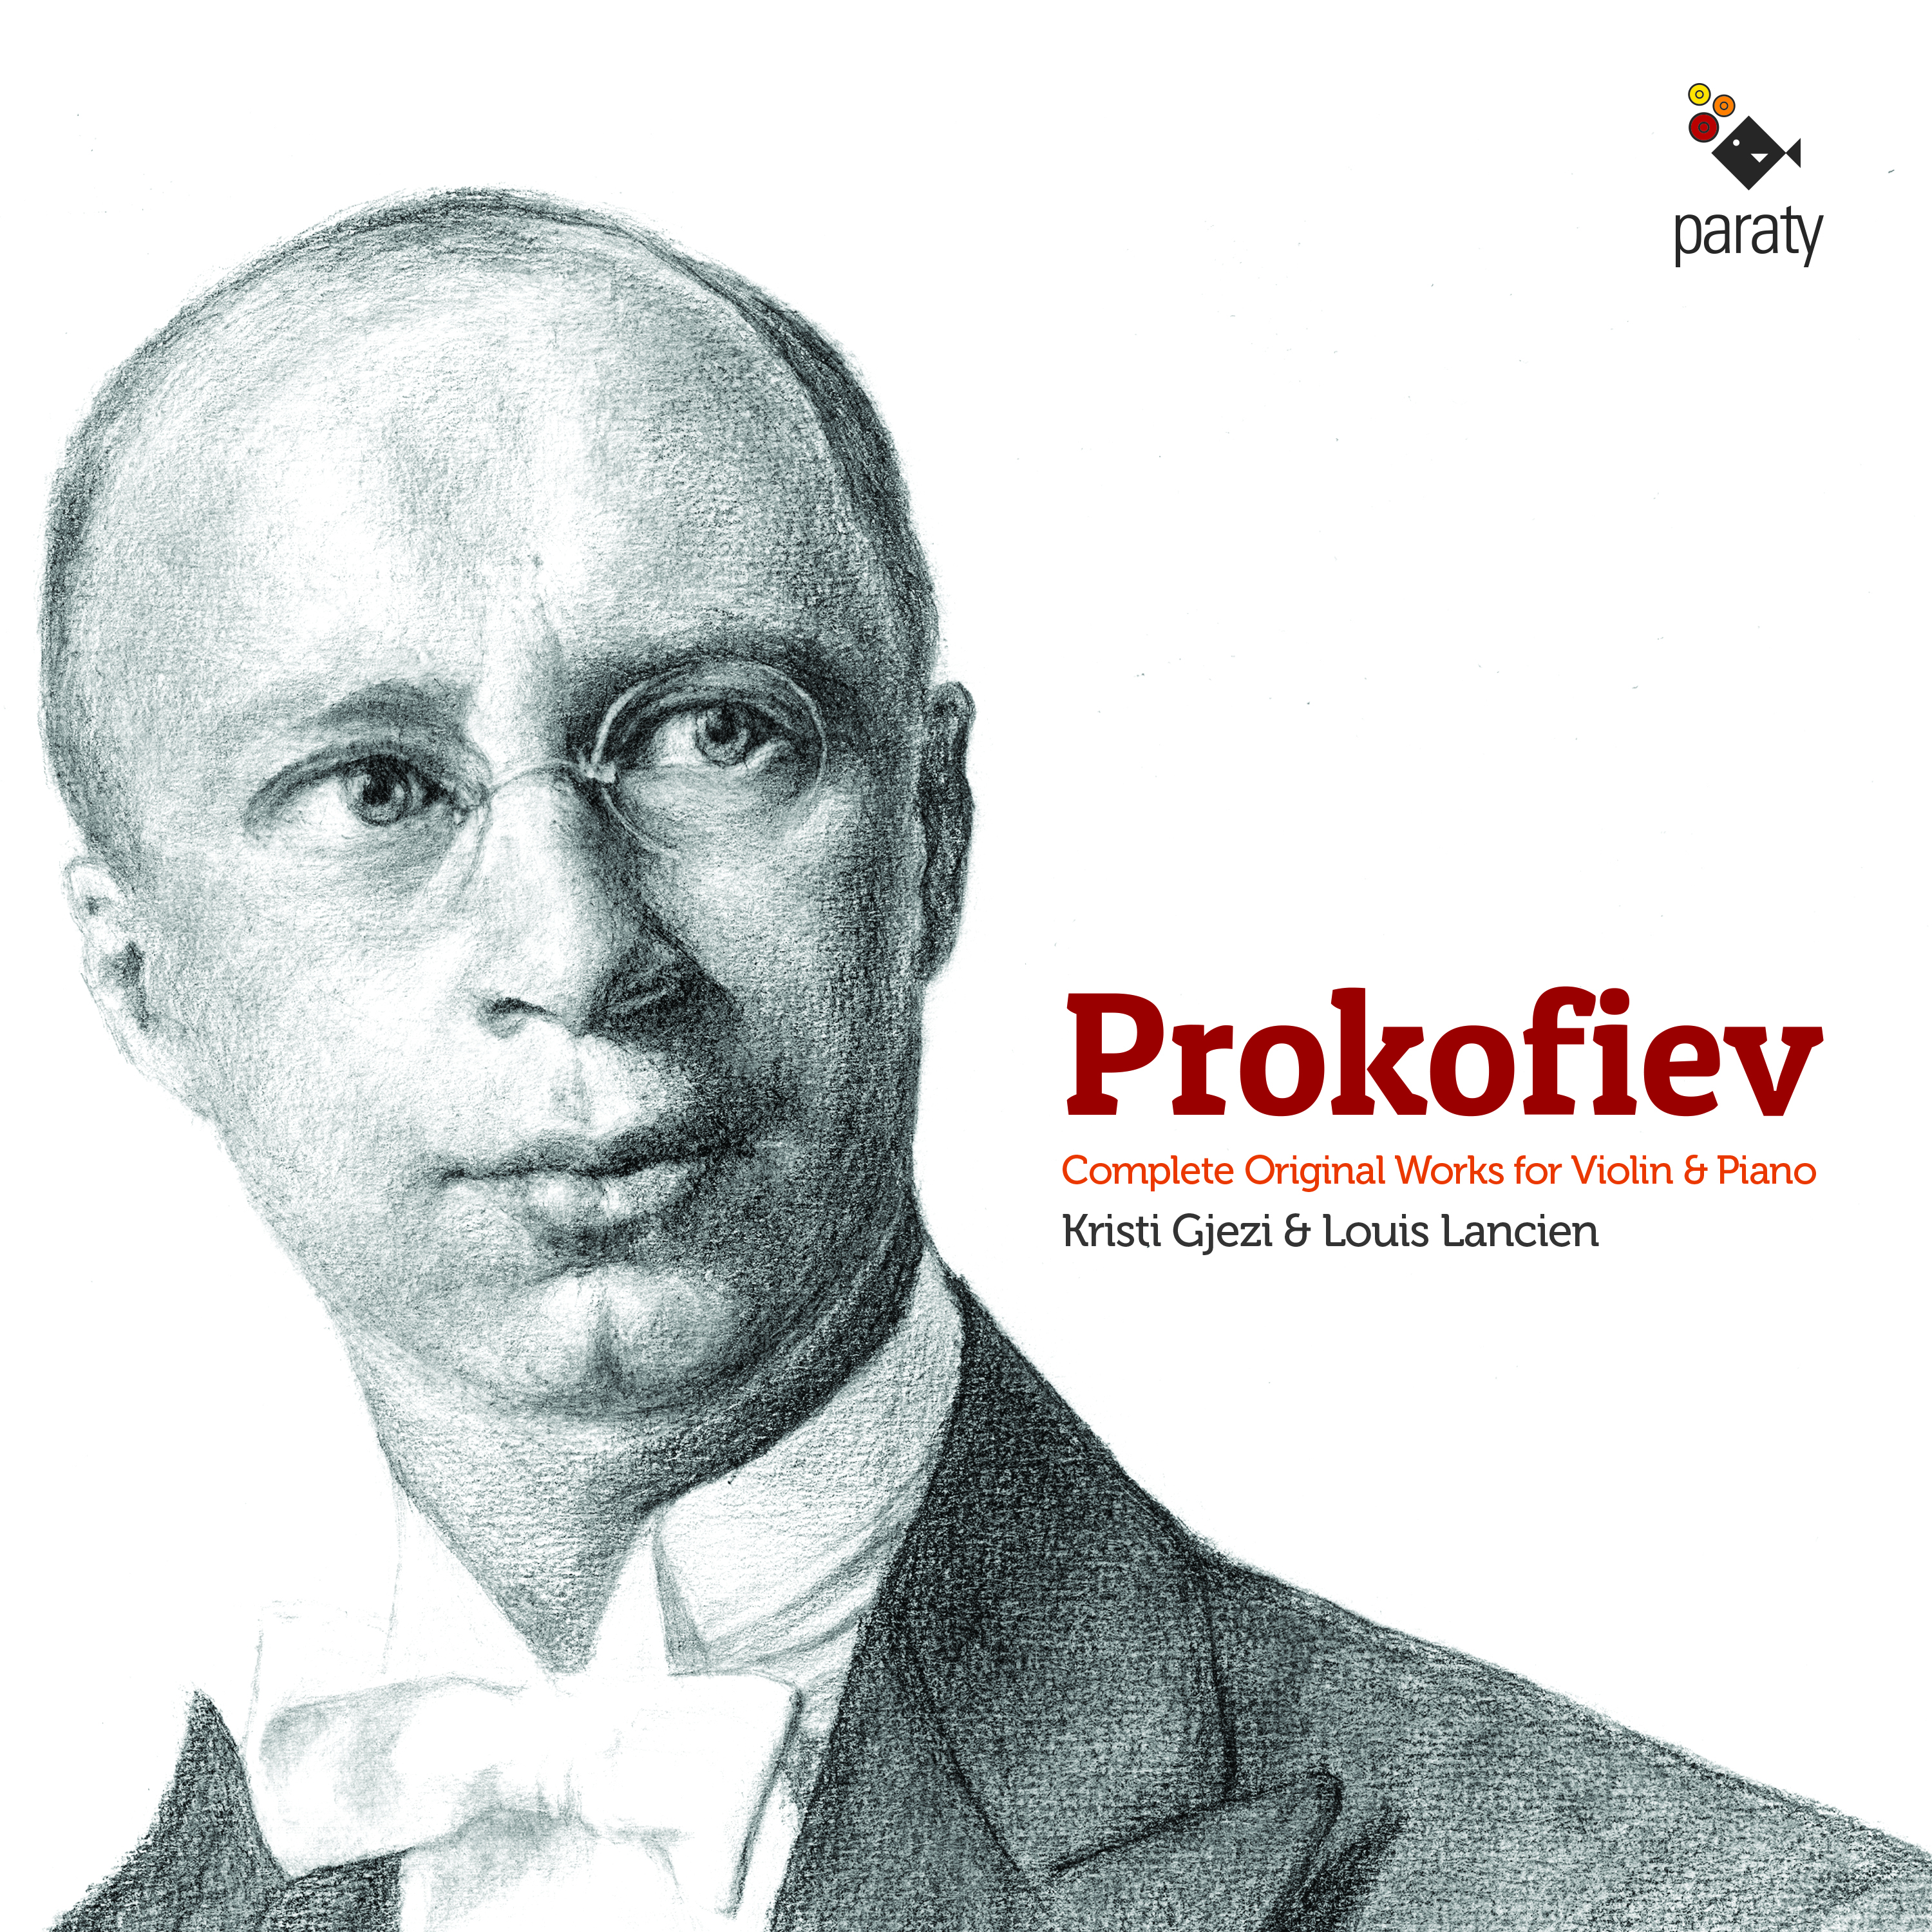 Prokofiev, Complete Original Works for Violon & Piano